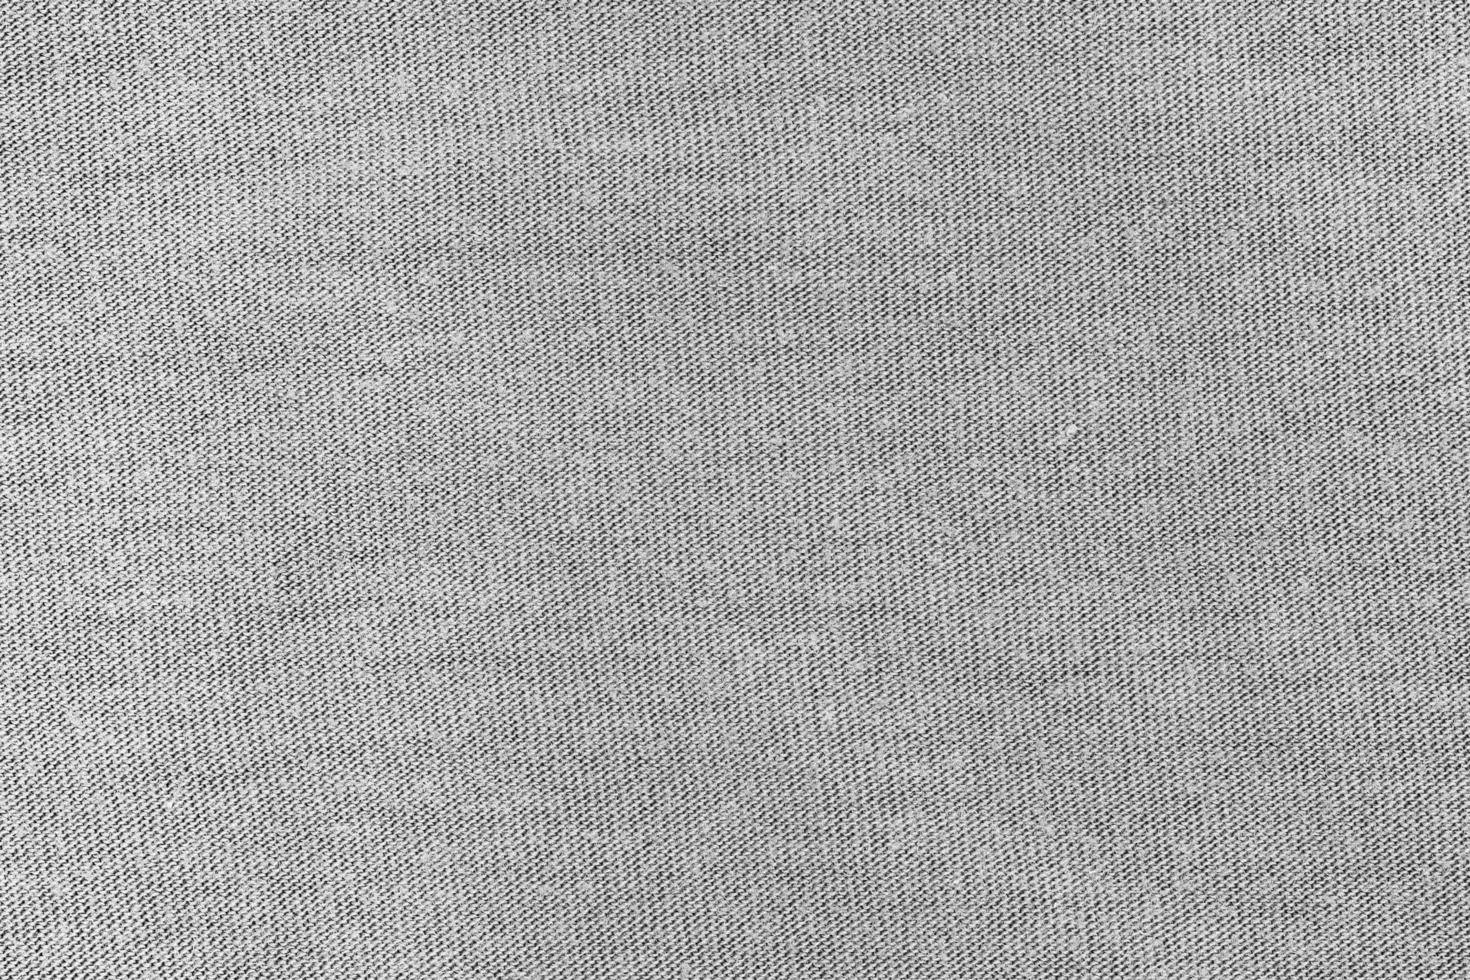 Close-up of gray fabric photo